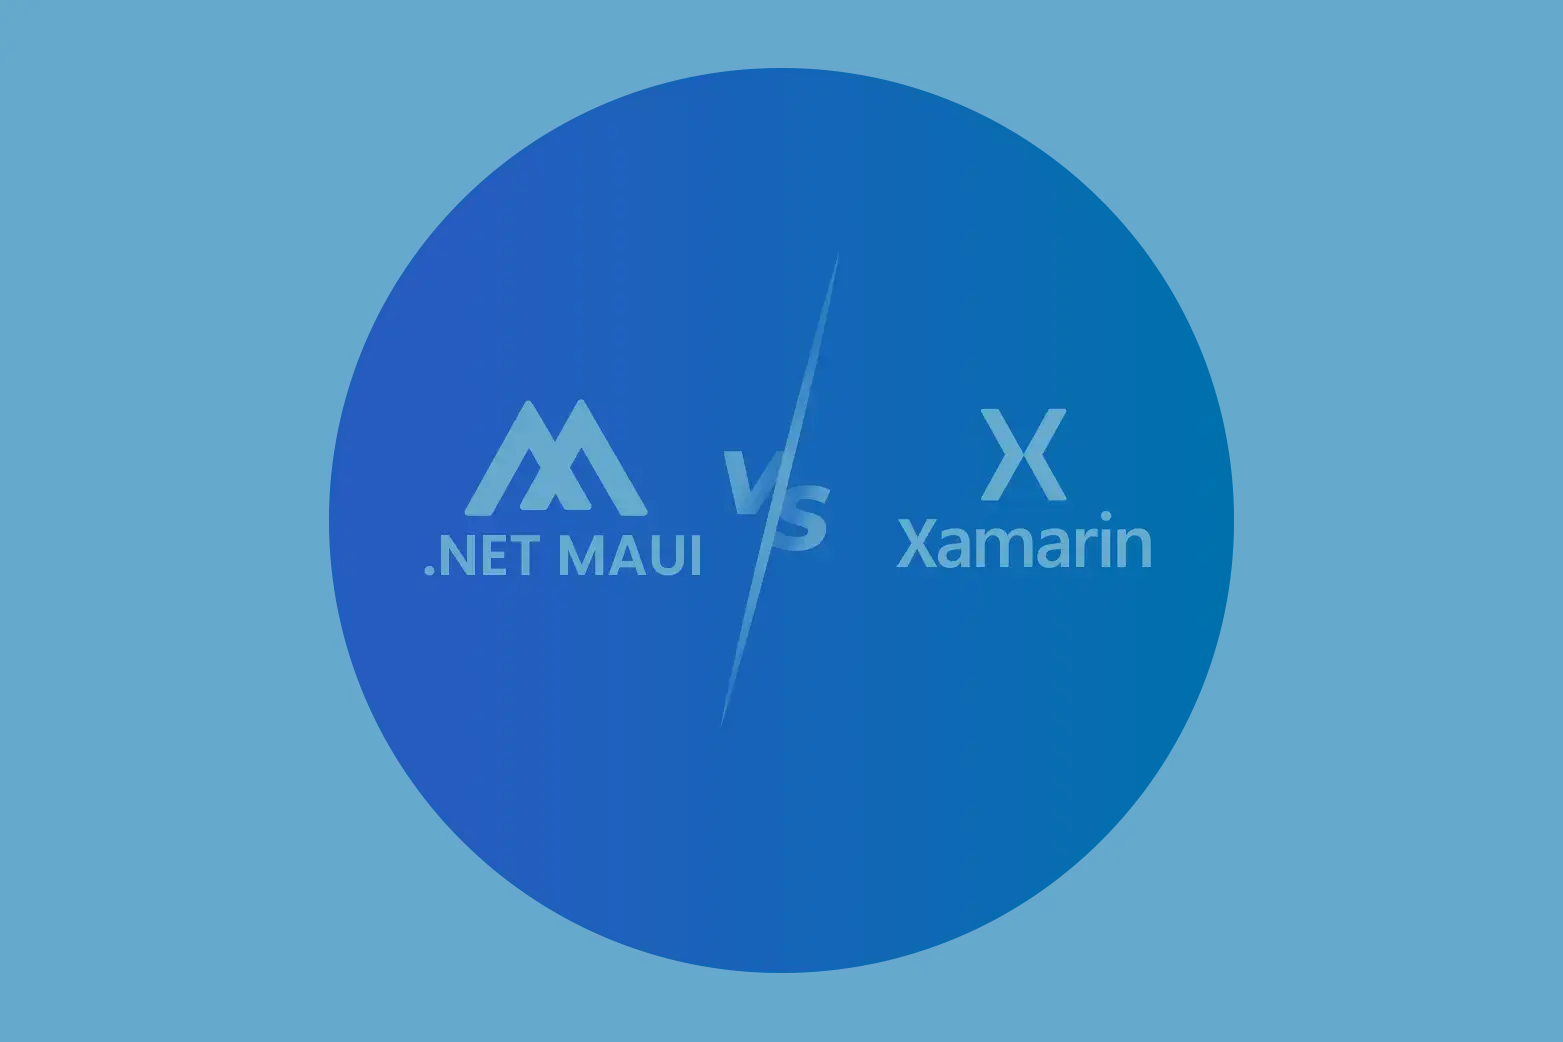 MAUI_VS_Xamarin.webp